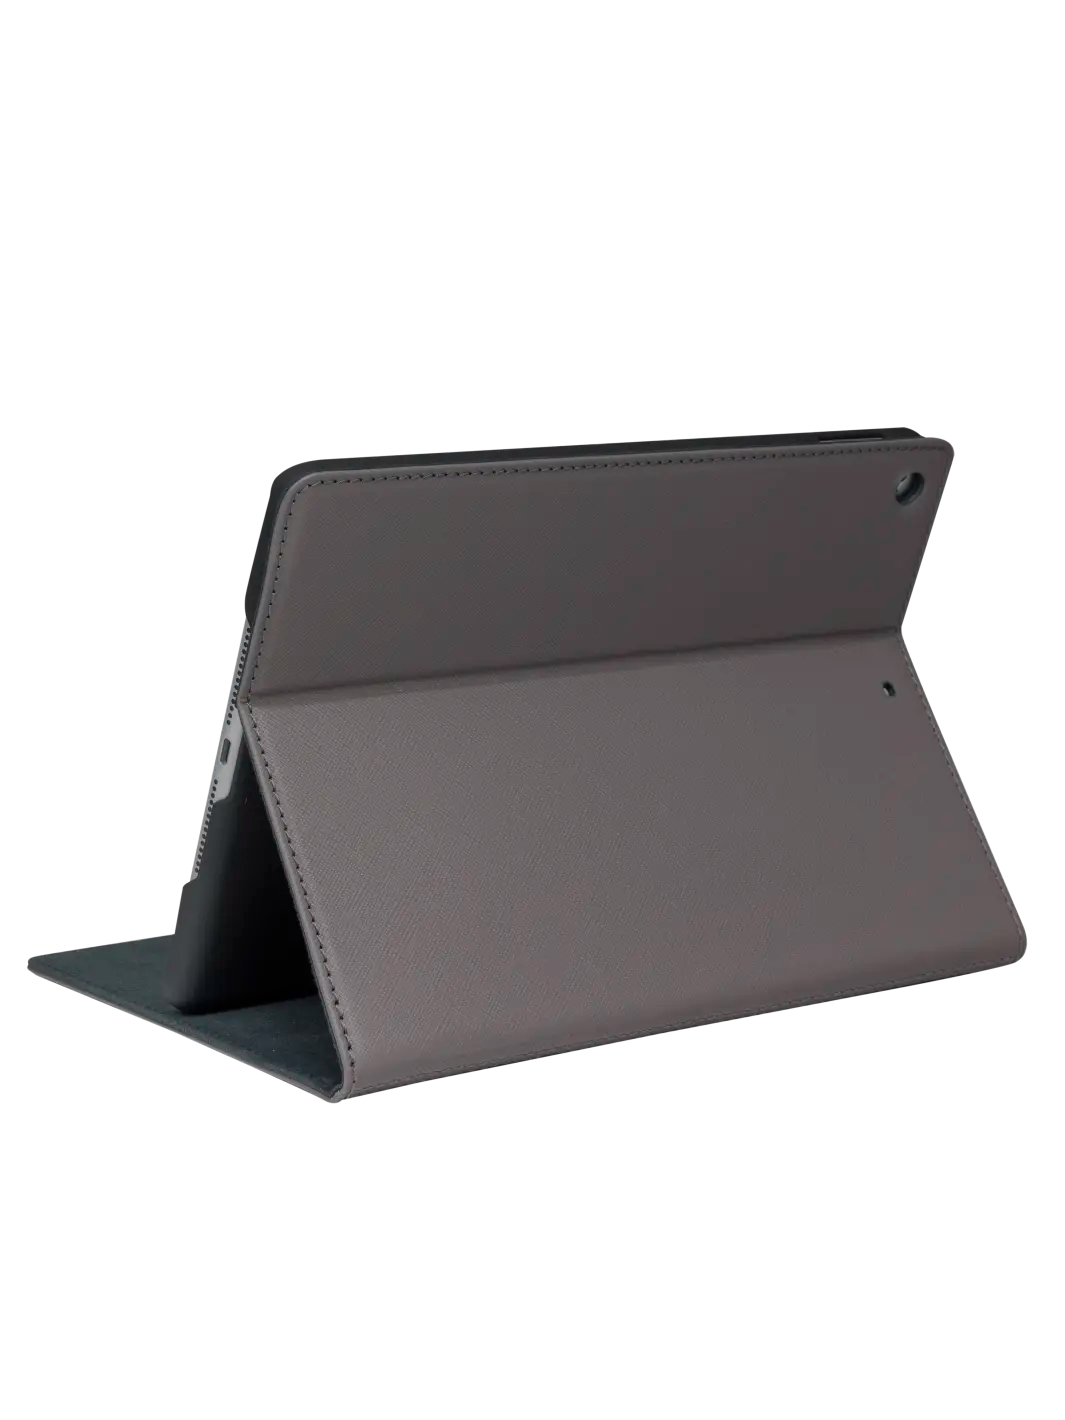 Tokyo Saffiano Shadow Grey iPad Air (3. generation) iPad Cases